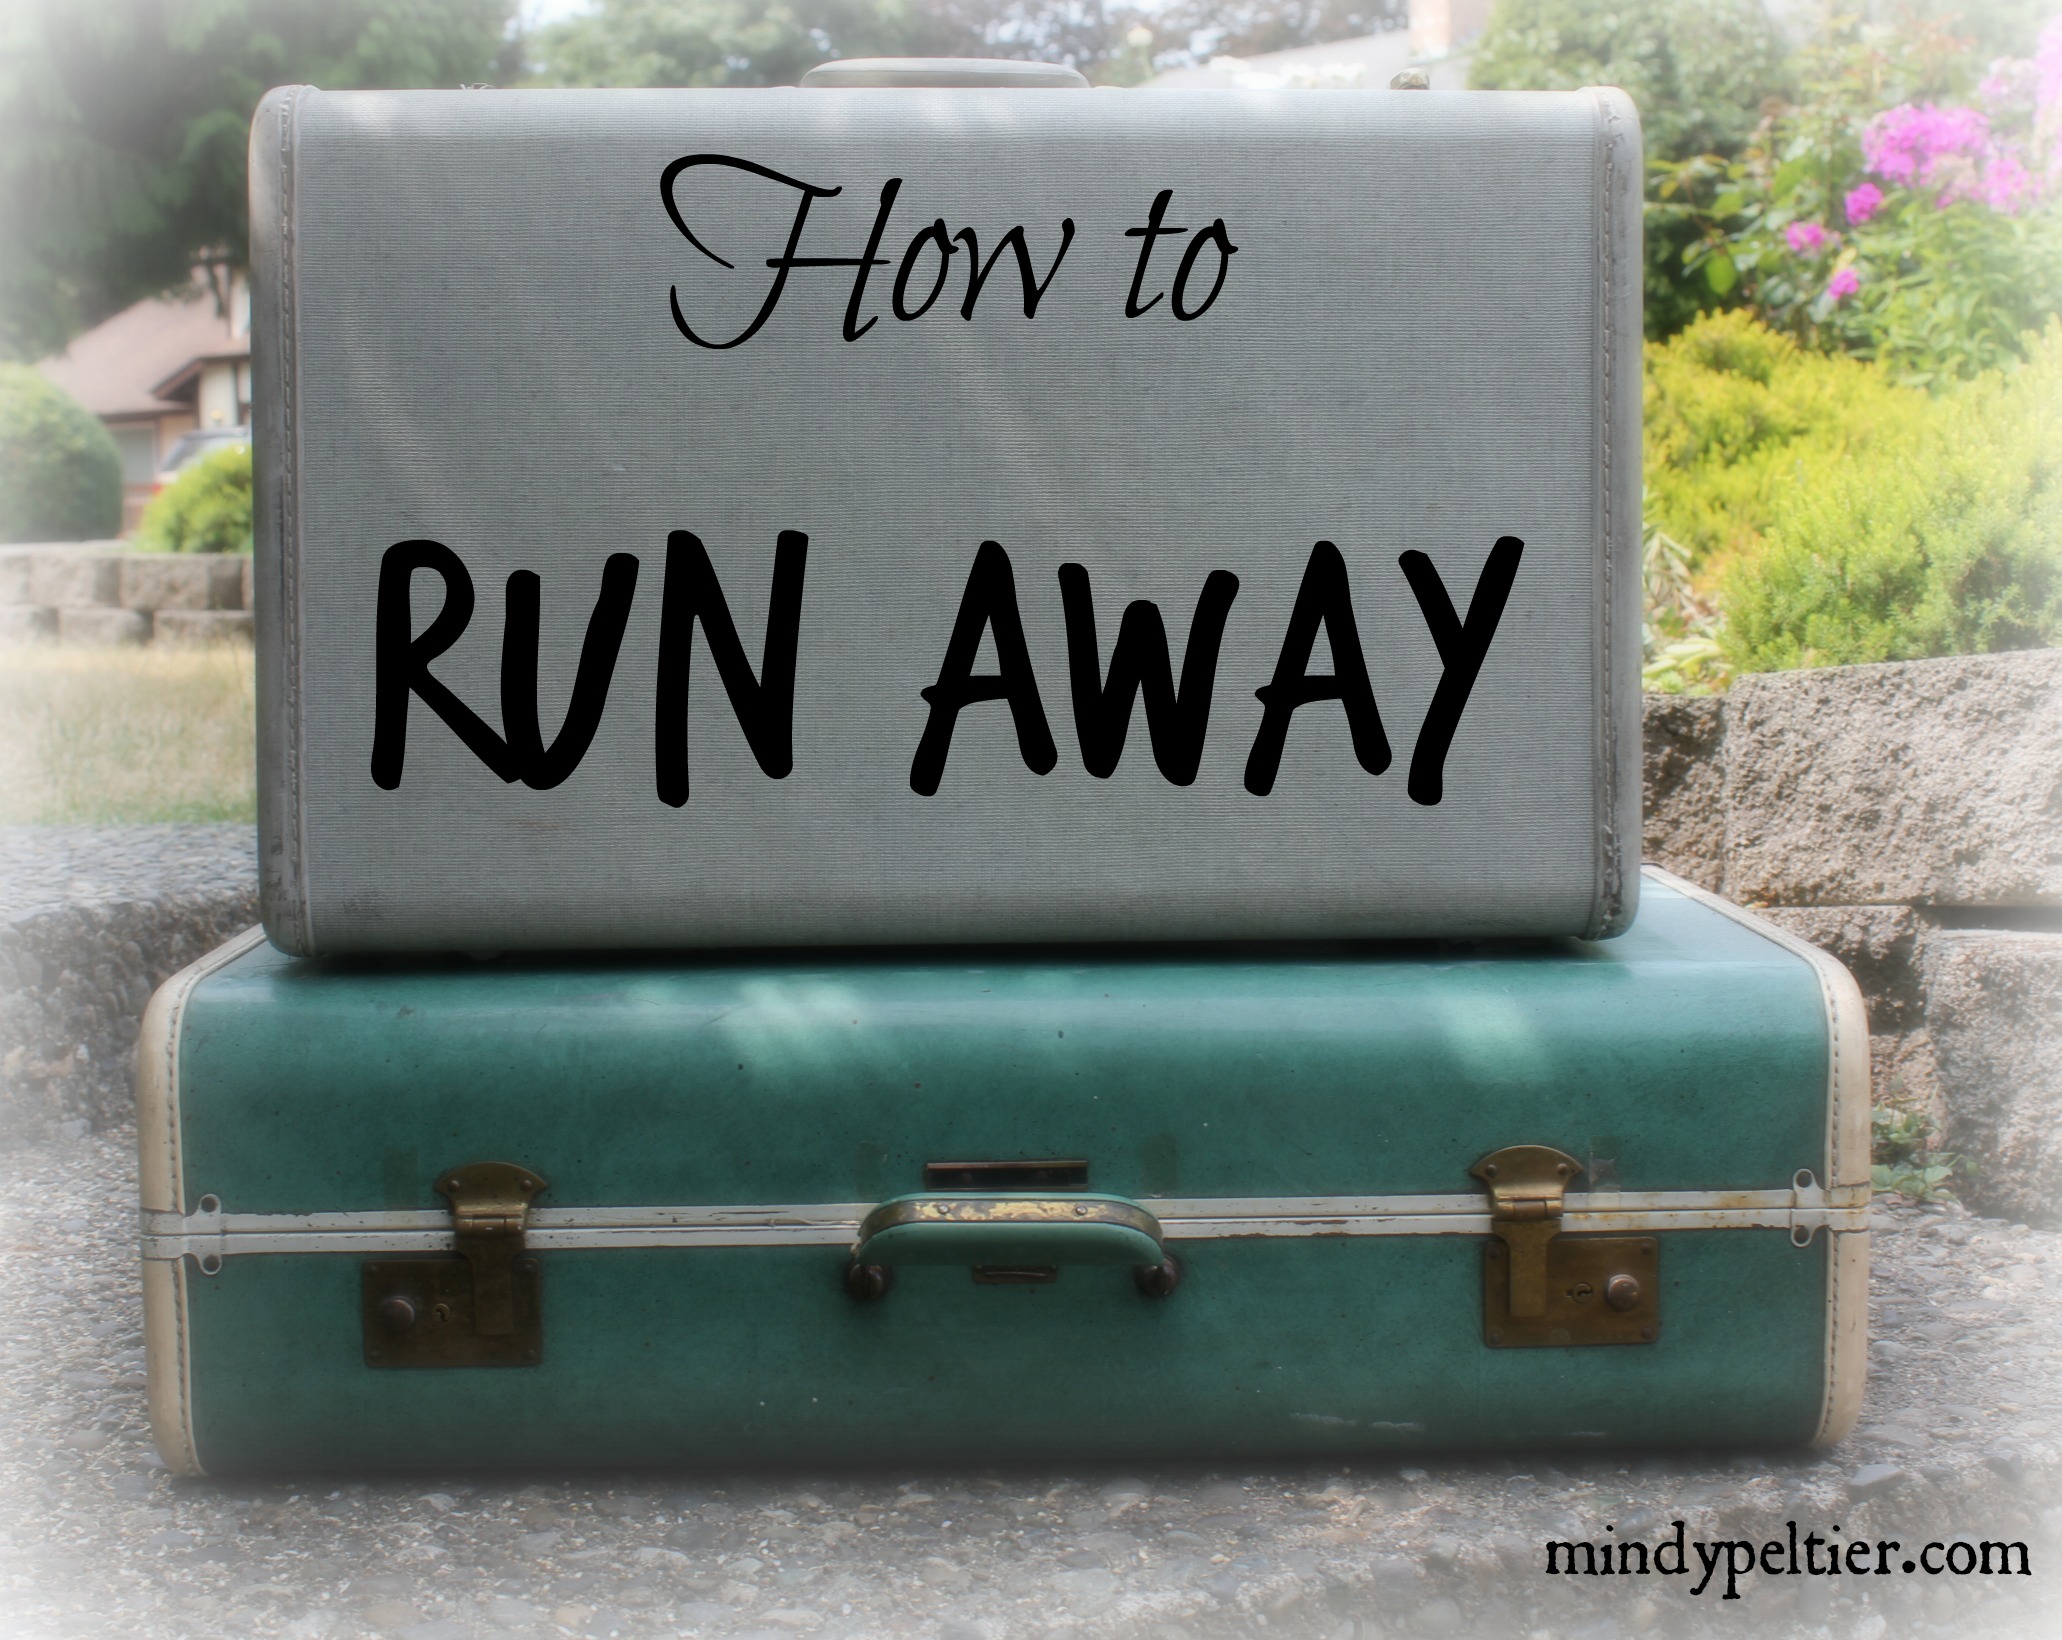 How to Run Away